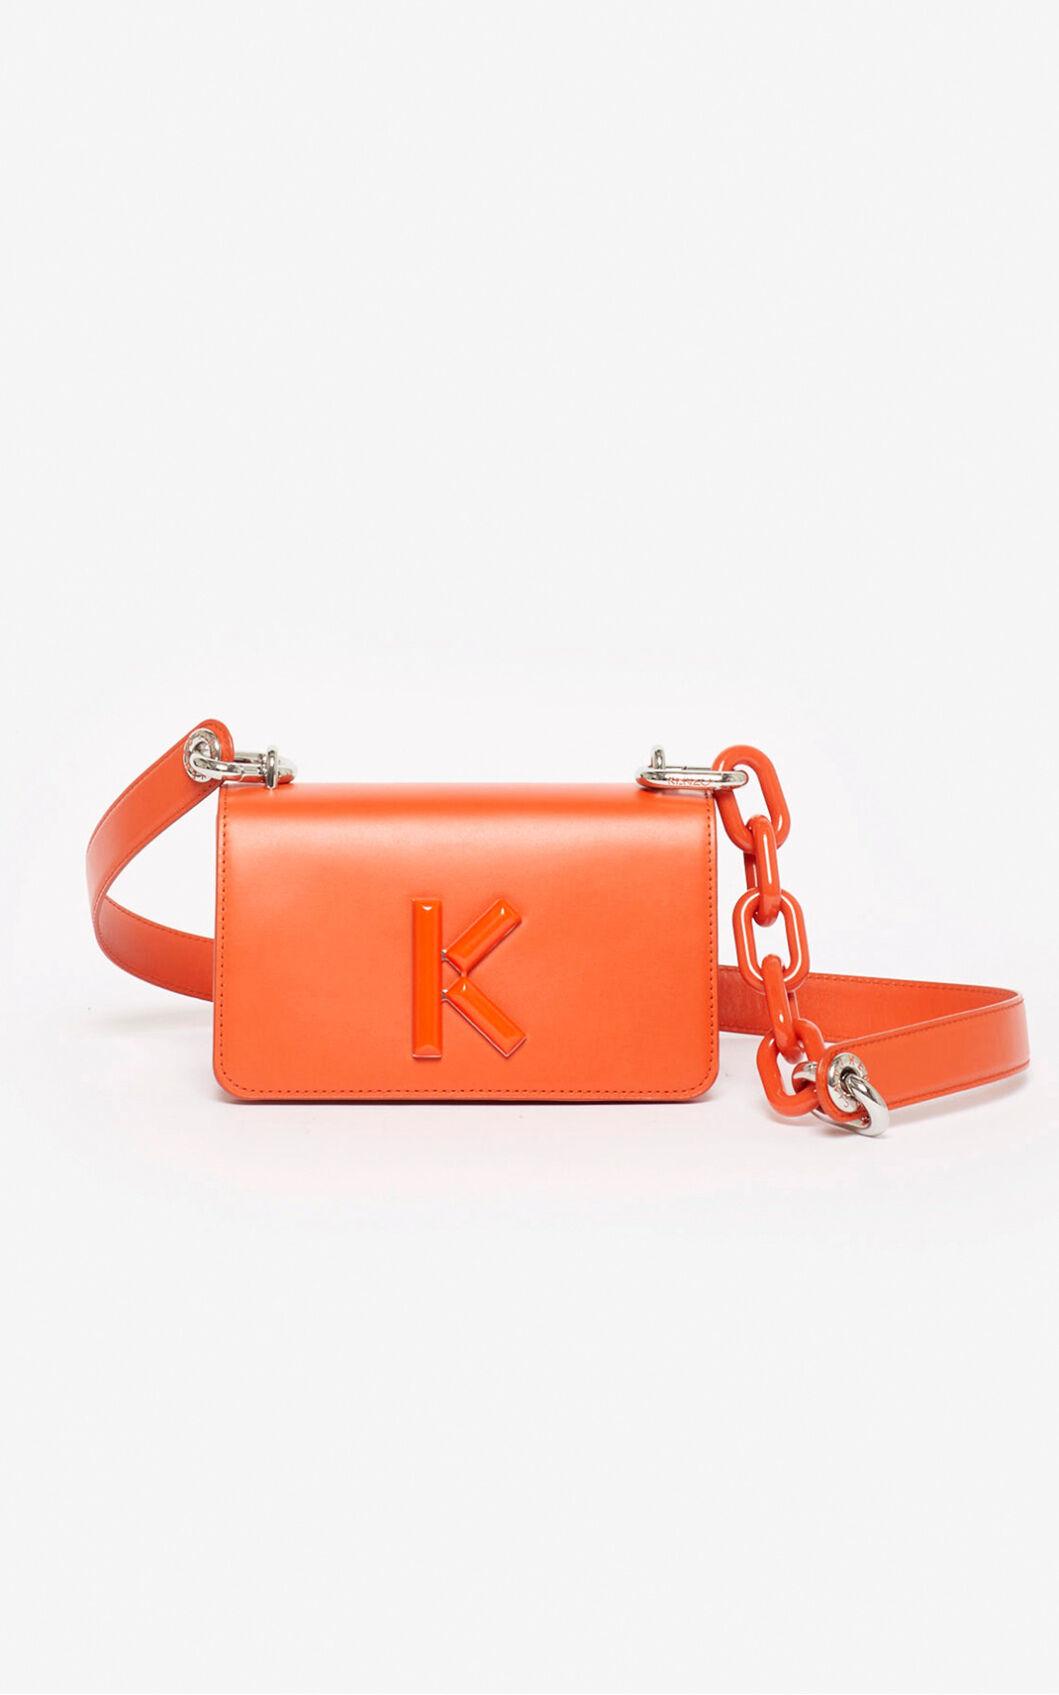 KENZO Kandy Bag in Deep Orange (Orange) - Lyst